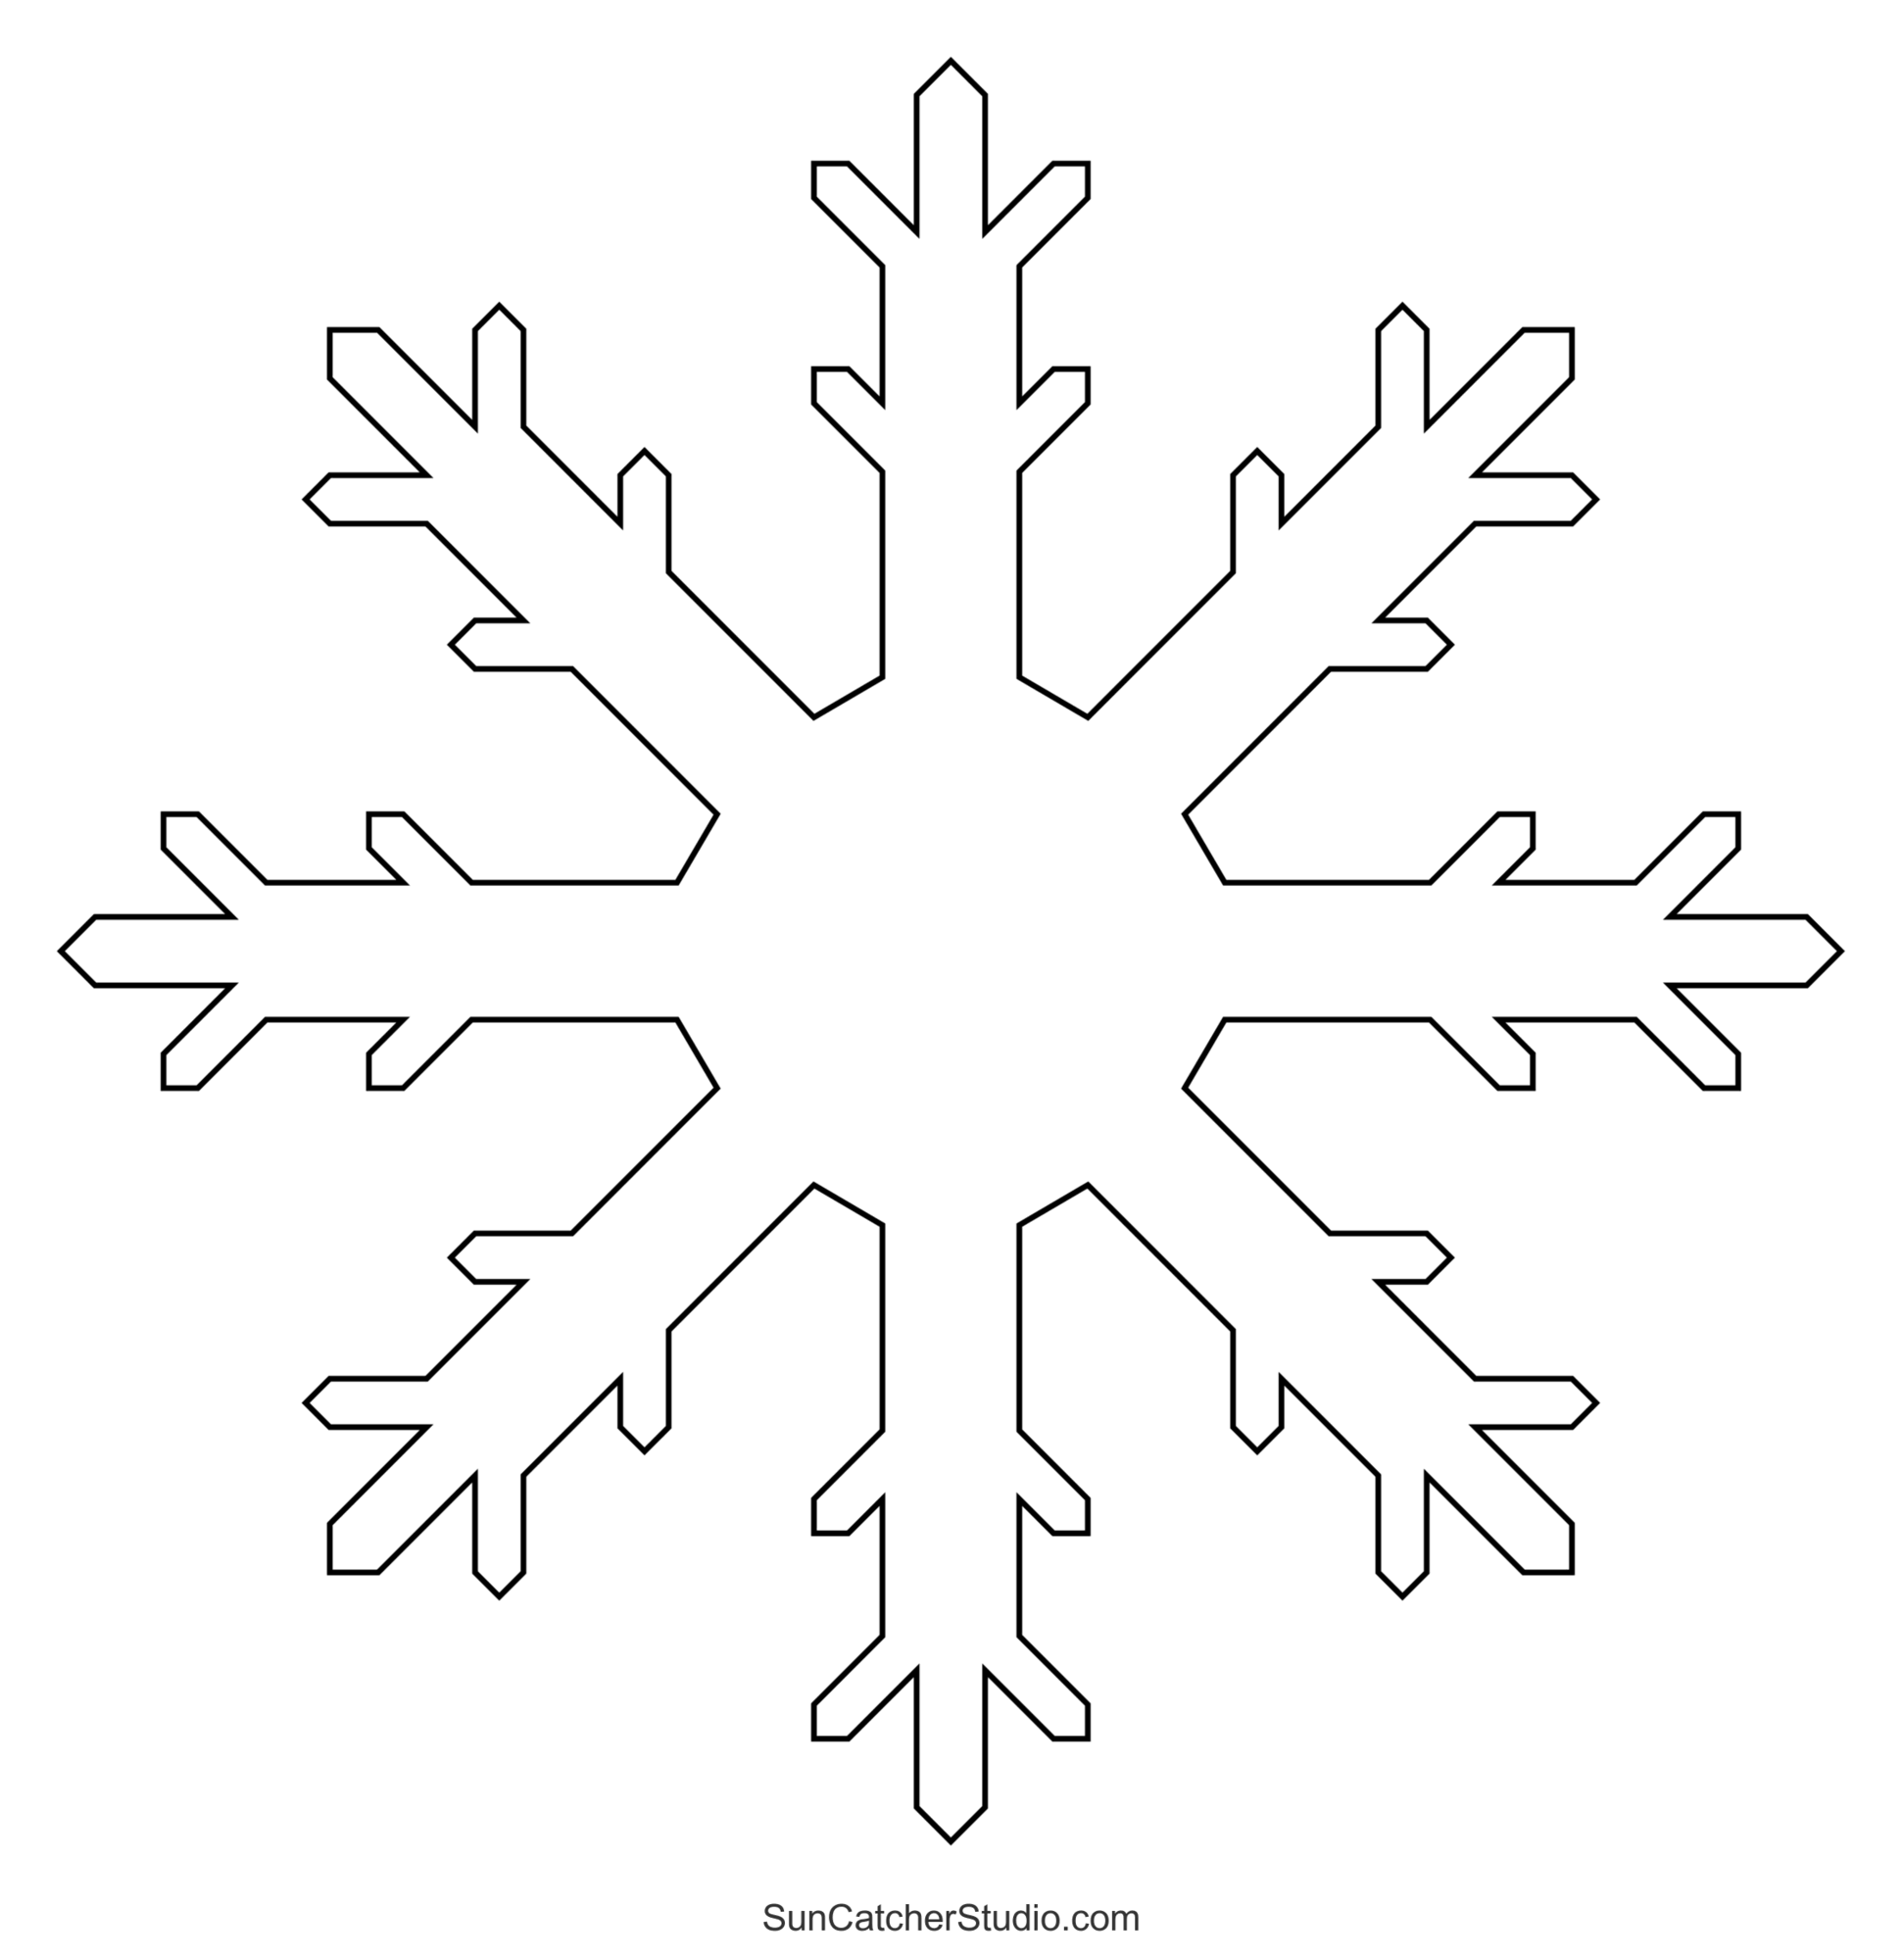 Snowflake Templates (Printable Stencils and Patterns) – DIY